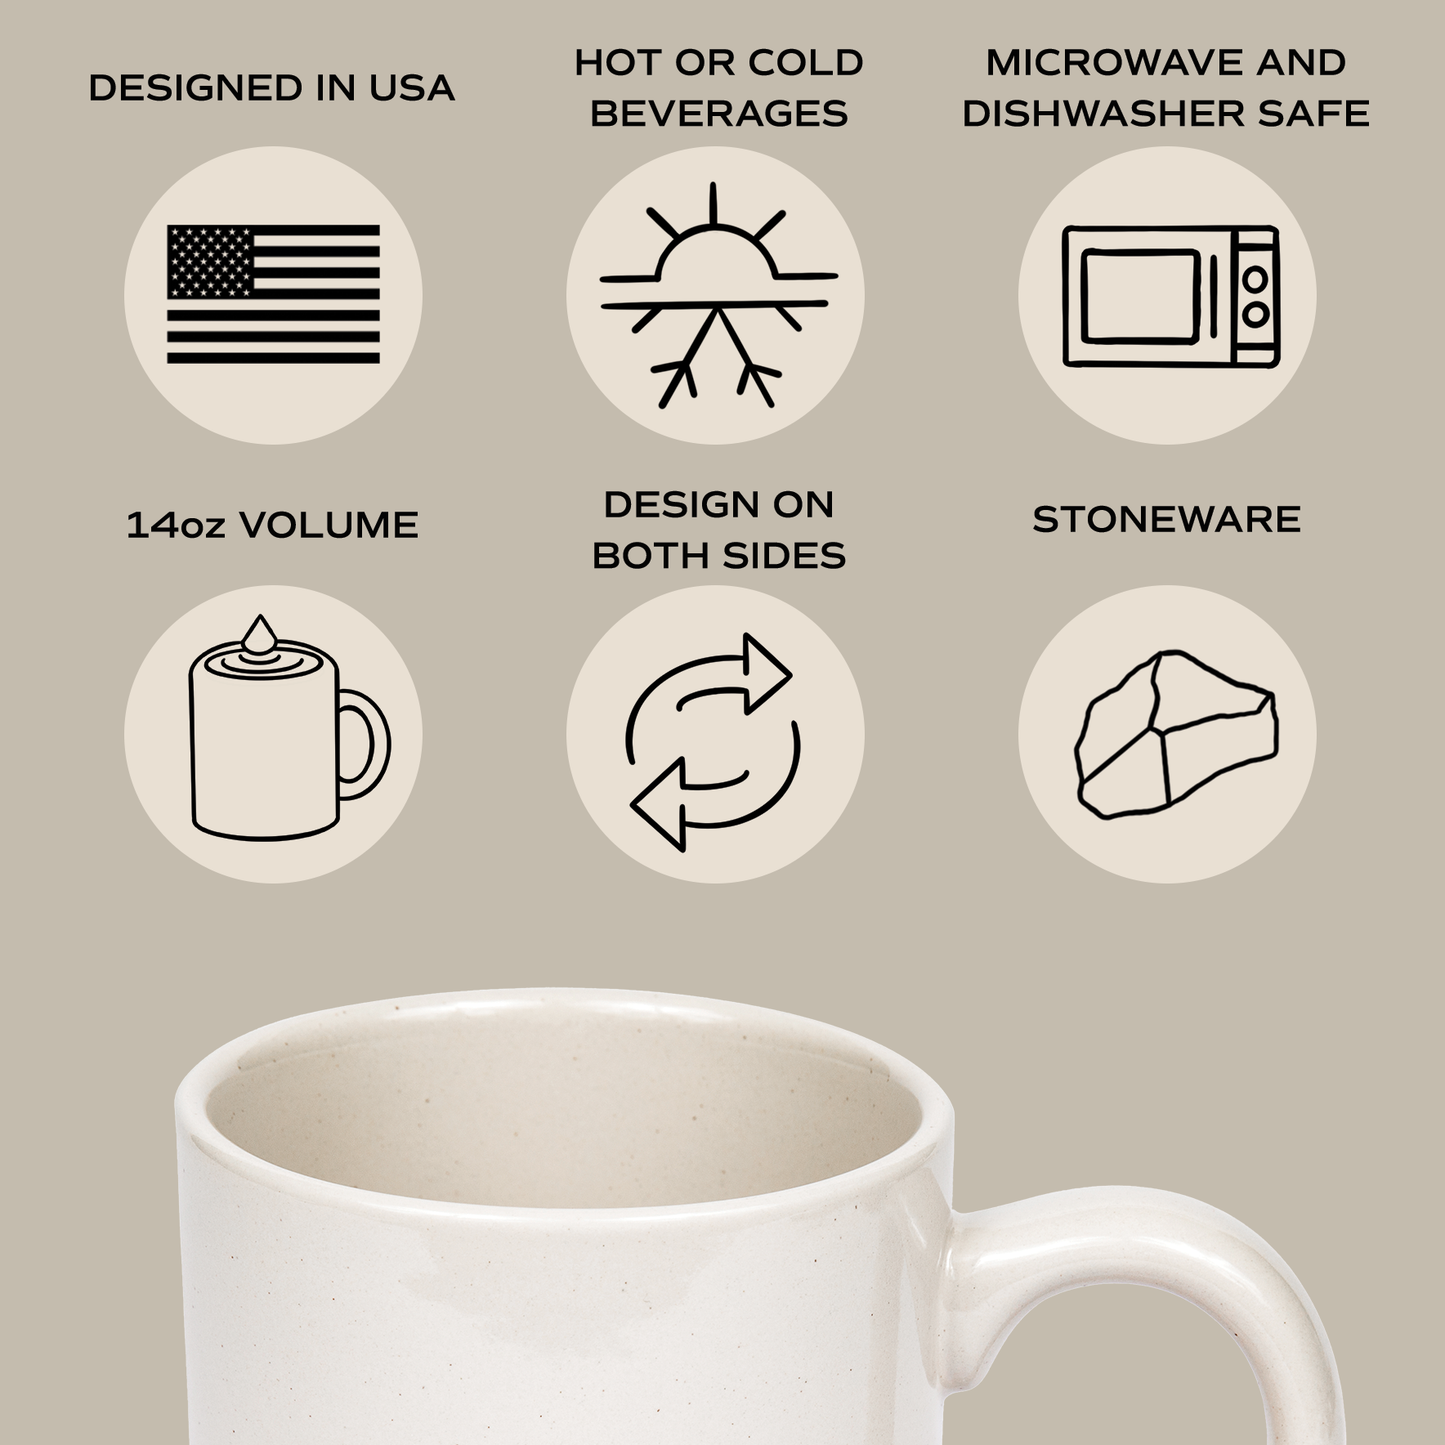 You Got This Stoneware Coffee Mug - Home Decor & Gifts